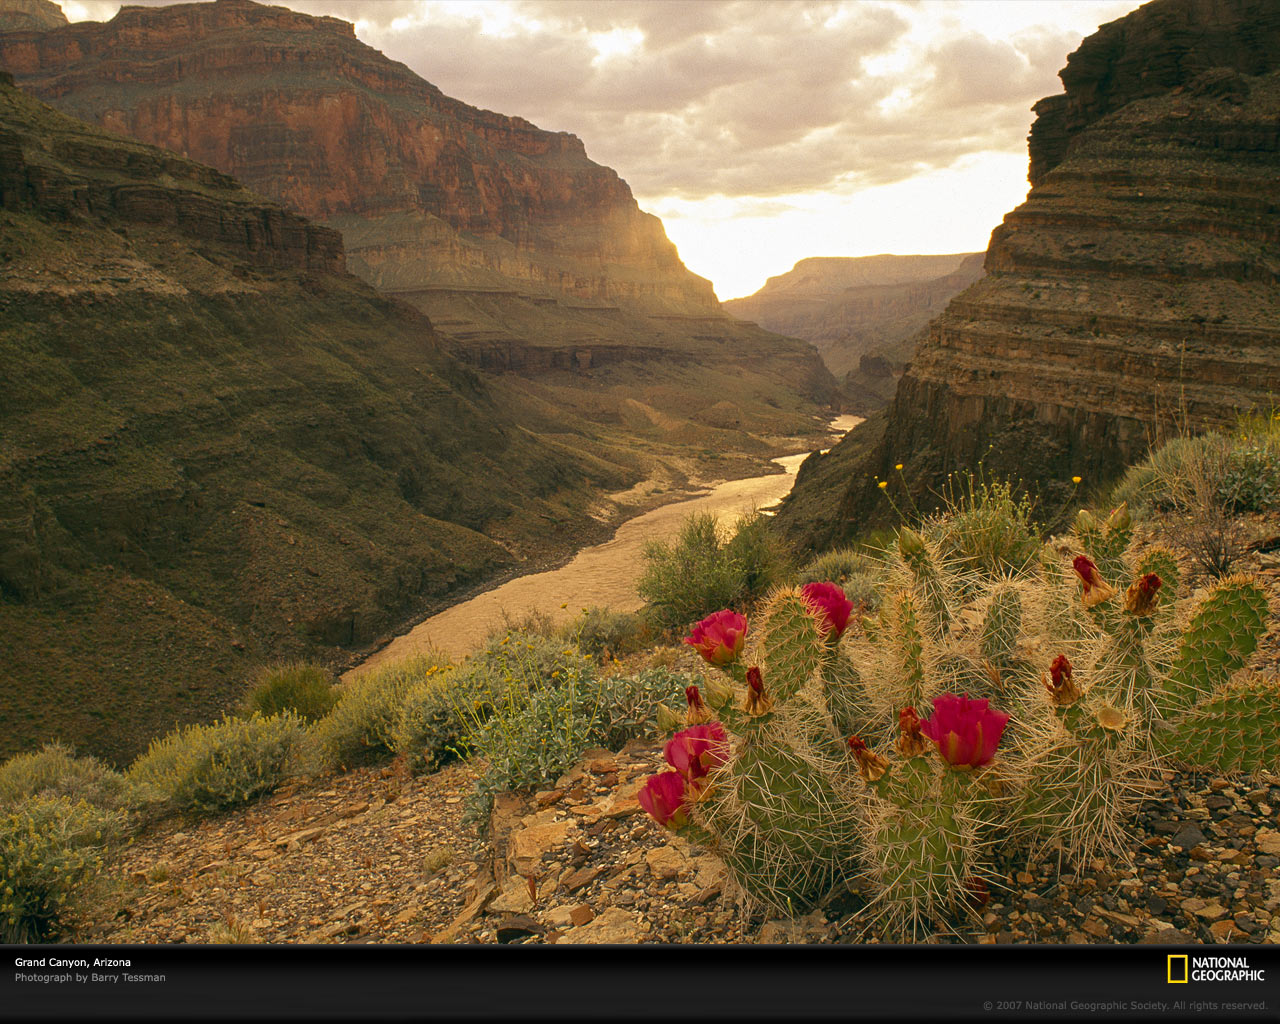 Colorado River Wallpaper Photos National Geographic